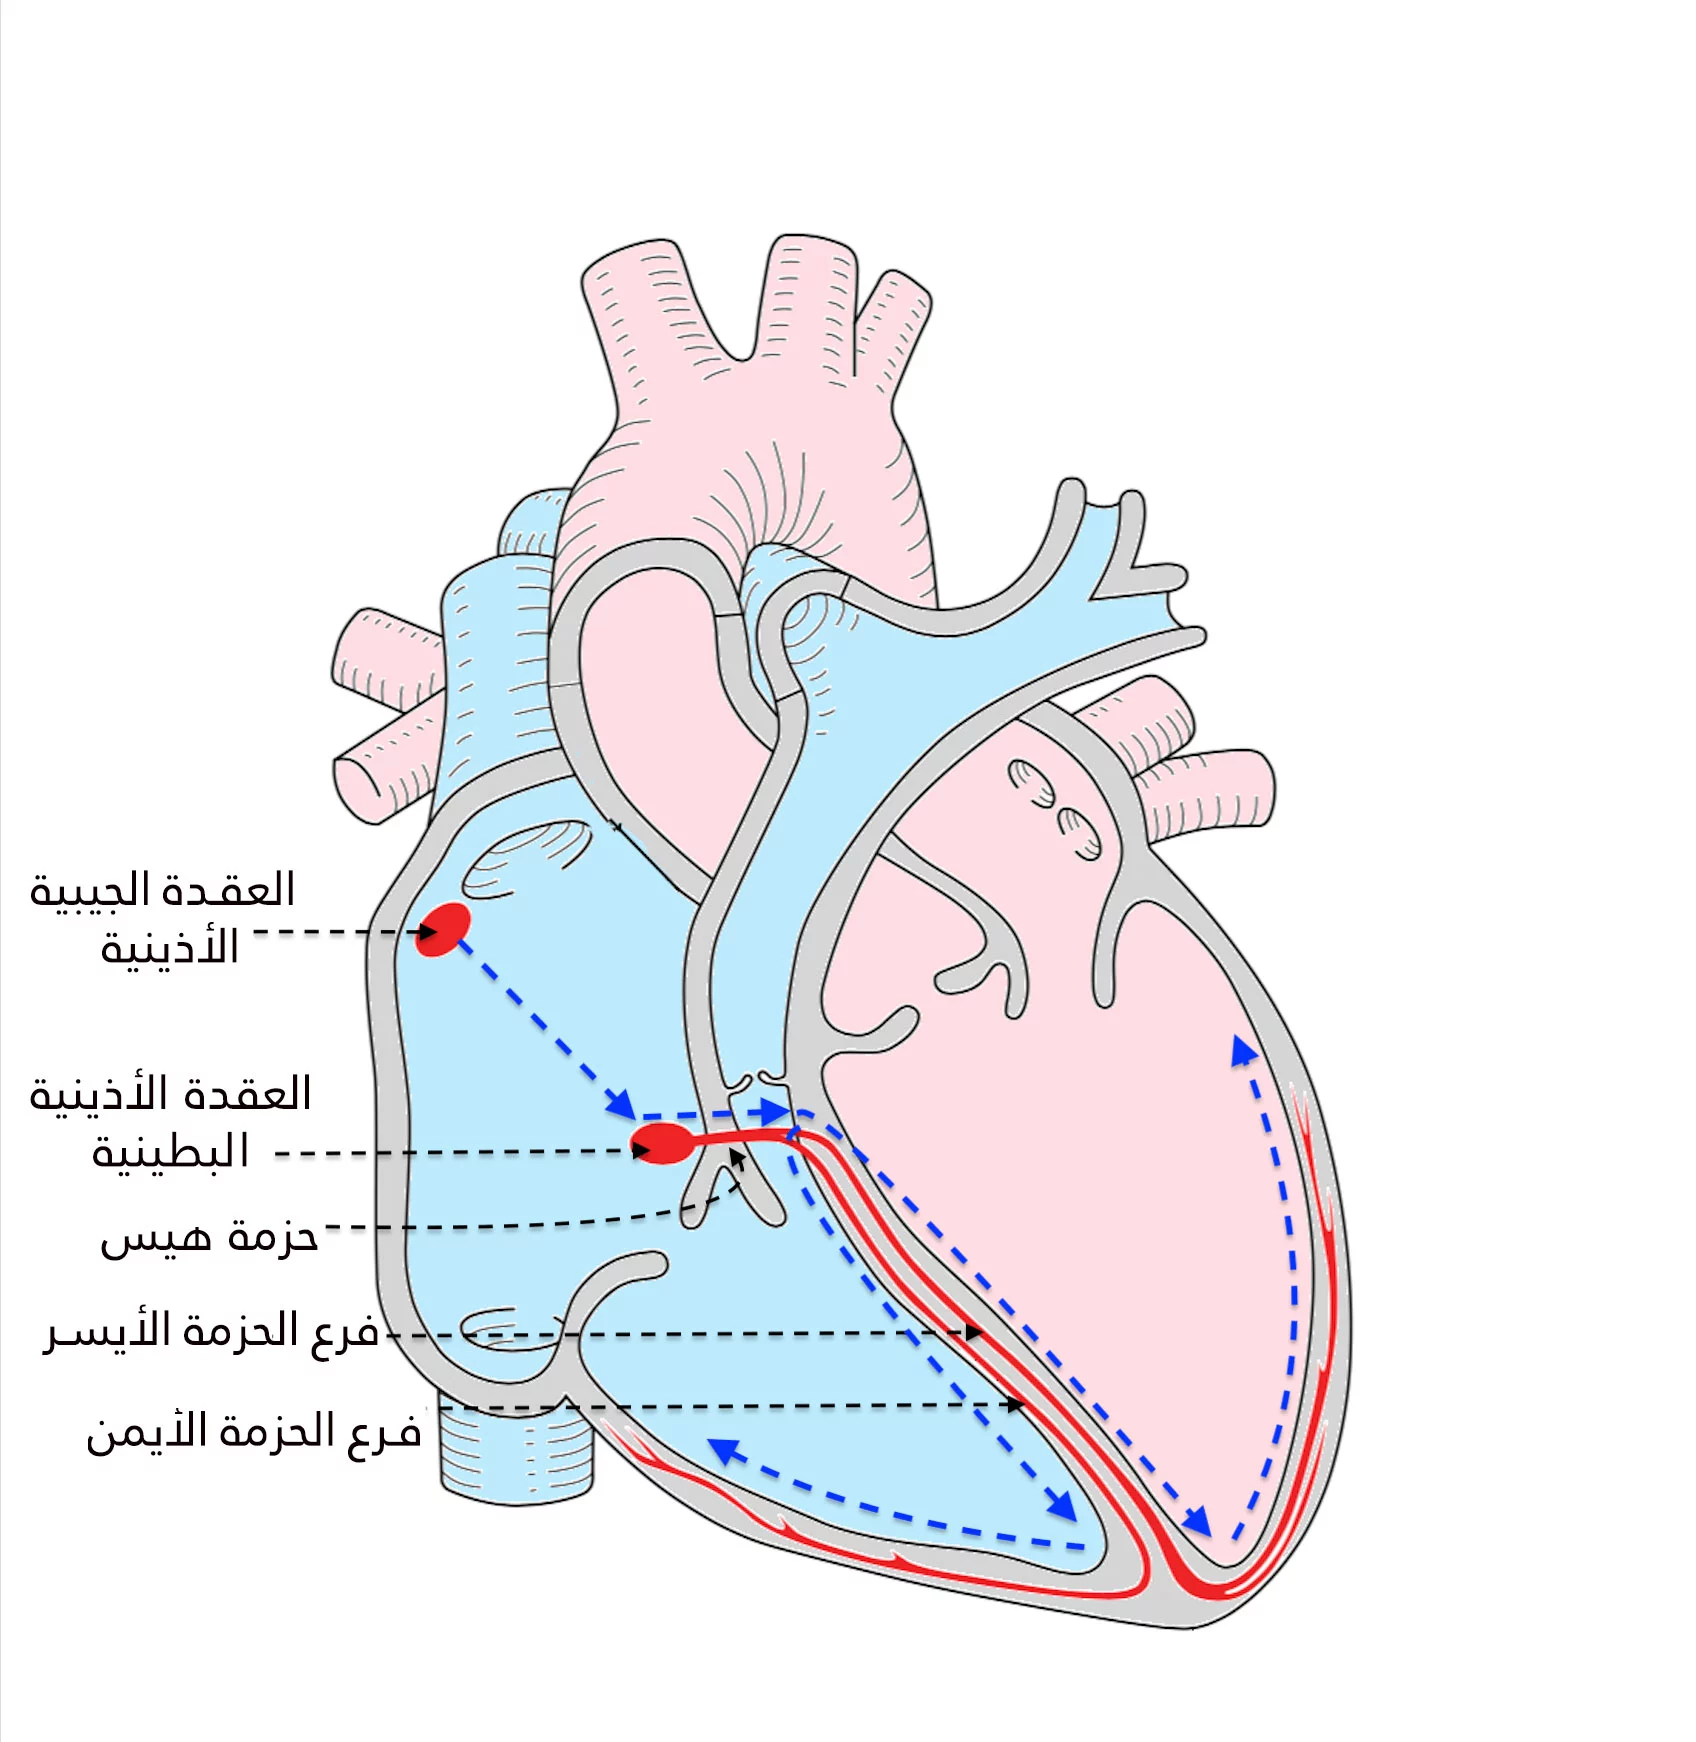 Cardiac electrical system